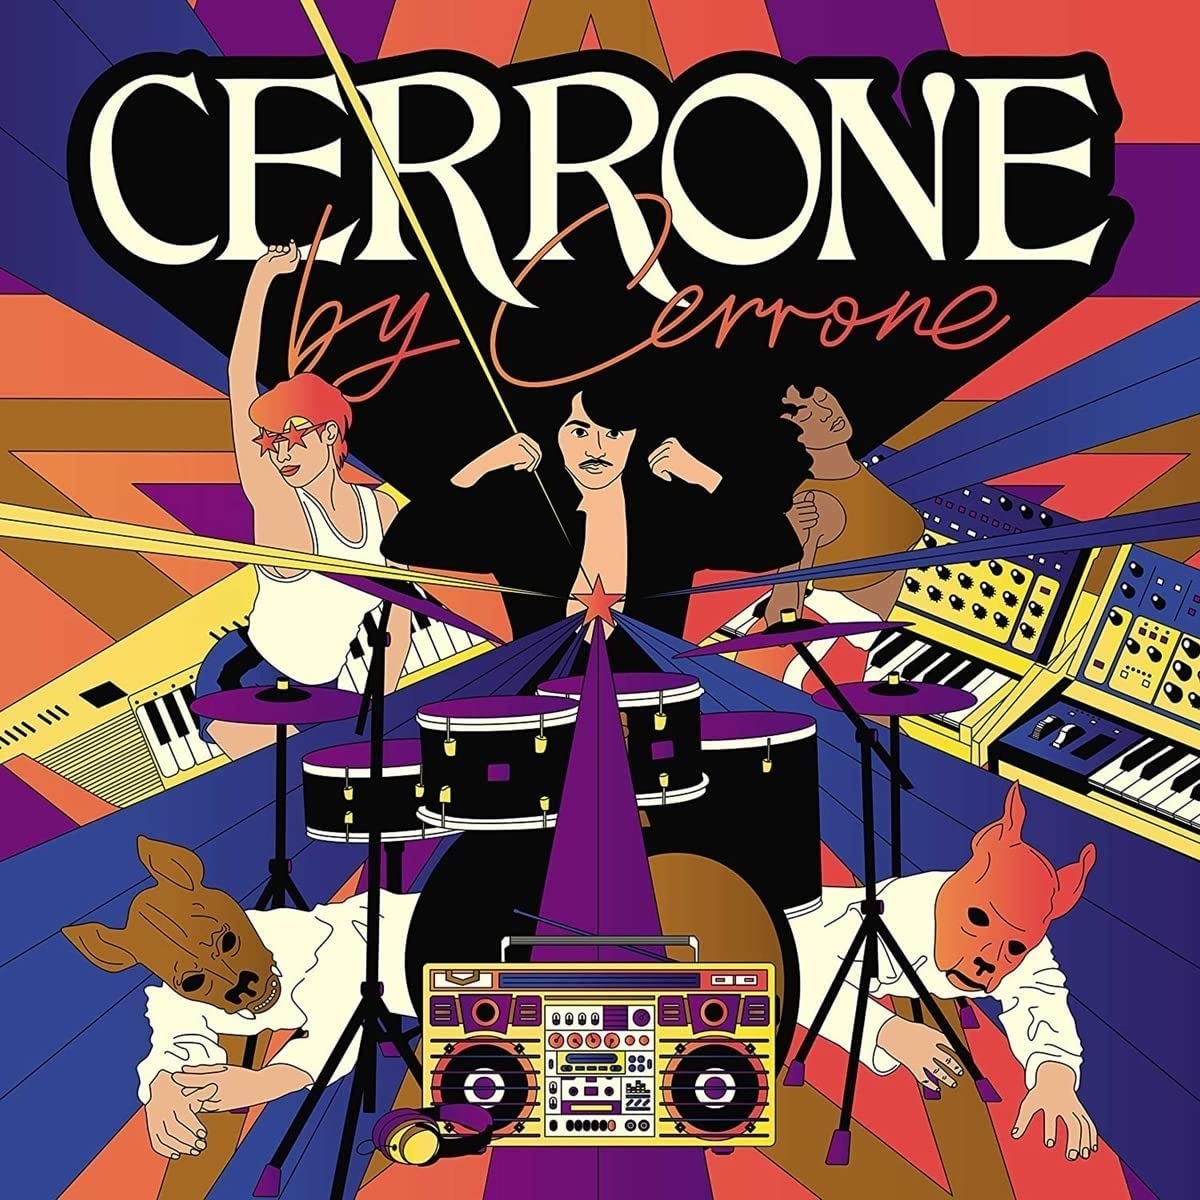 Cerrone By Cerrone